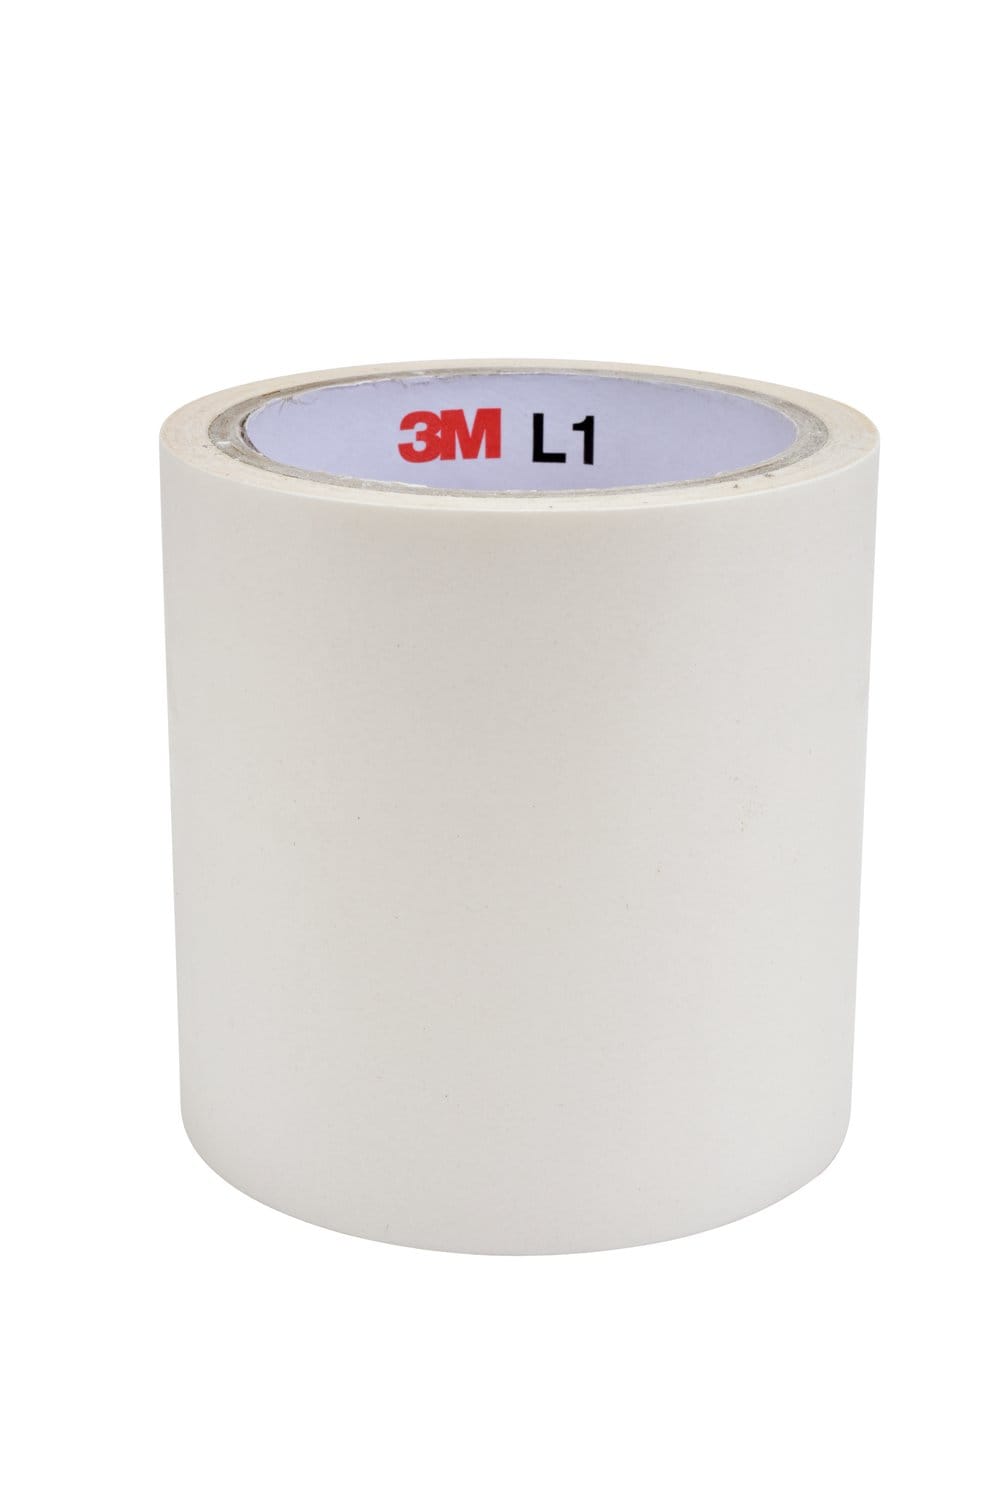 7100089788 - 3M Scrim Reinforced Adhesive Tape L1+RT, Clear, 1372 mm x 230 m, 0.08
mm, 6 rolls per pallet